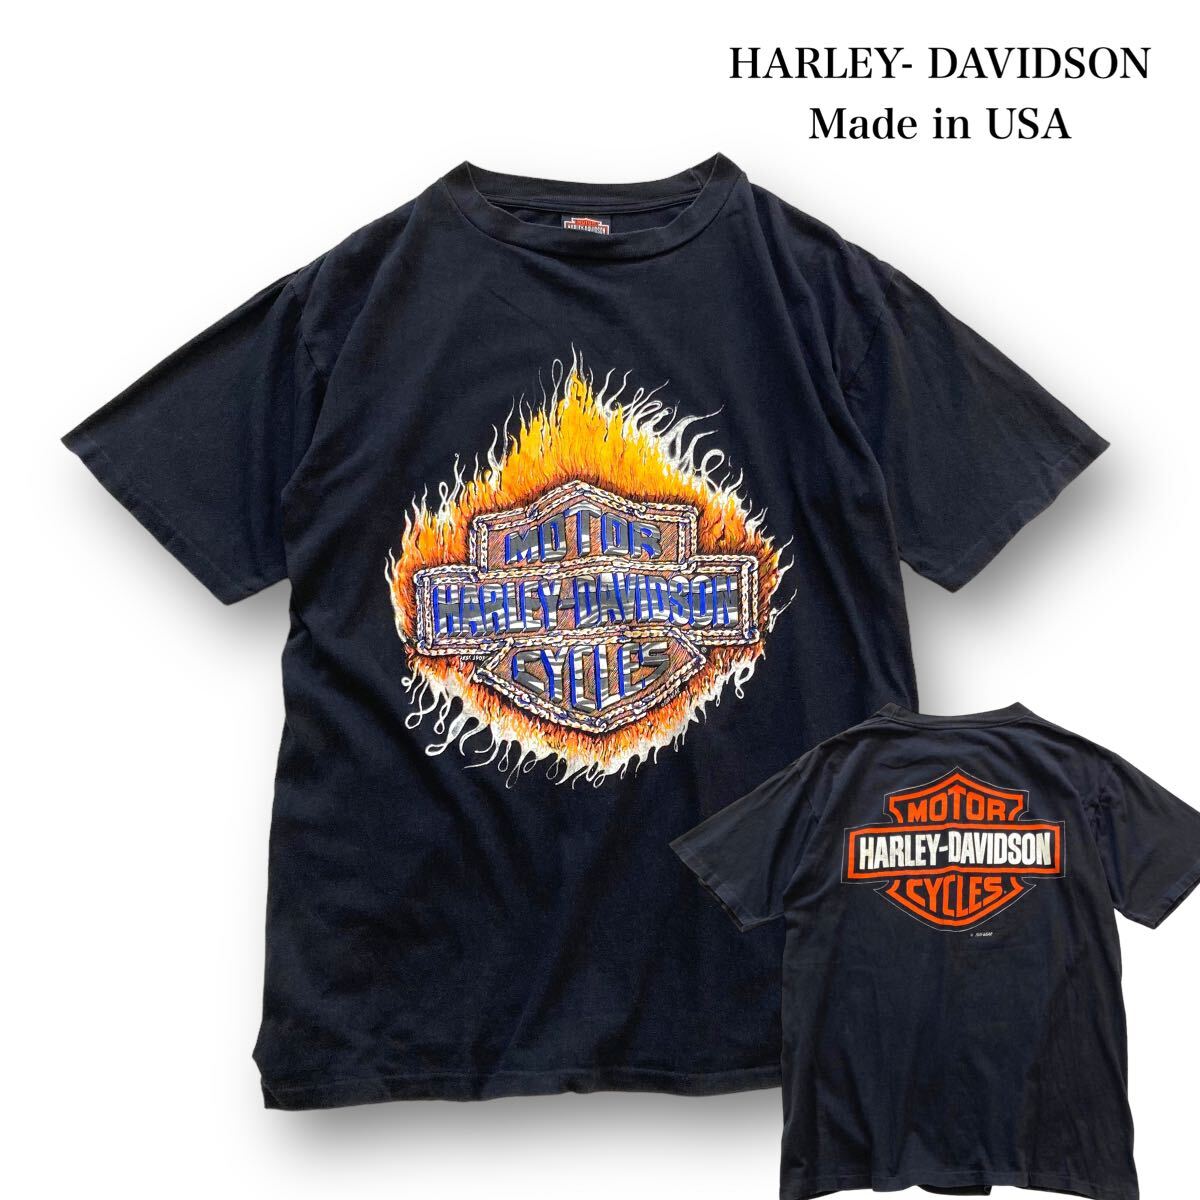 【HARLEY -DAVIDSON】90s ハーレーダビットソン USA製 シングルステッチ Tシャツ 半袖 古着 ヴィンテージファイヤーパターン 黒 ブラック